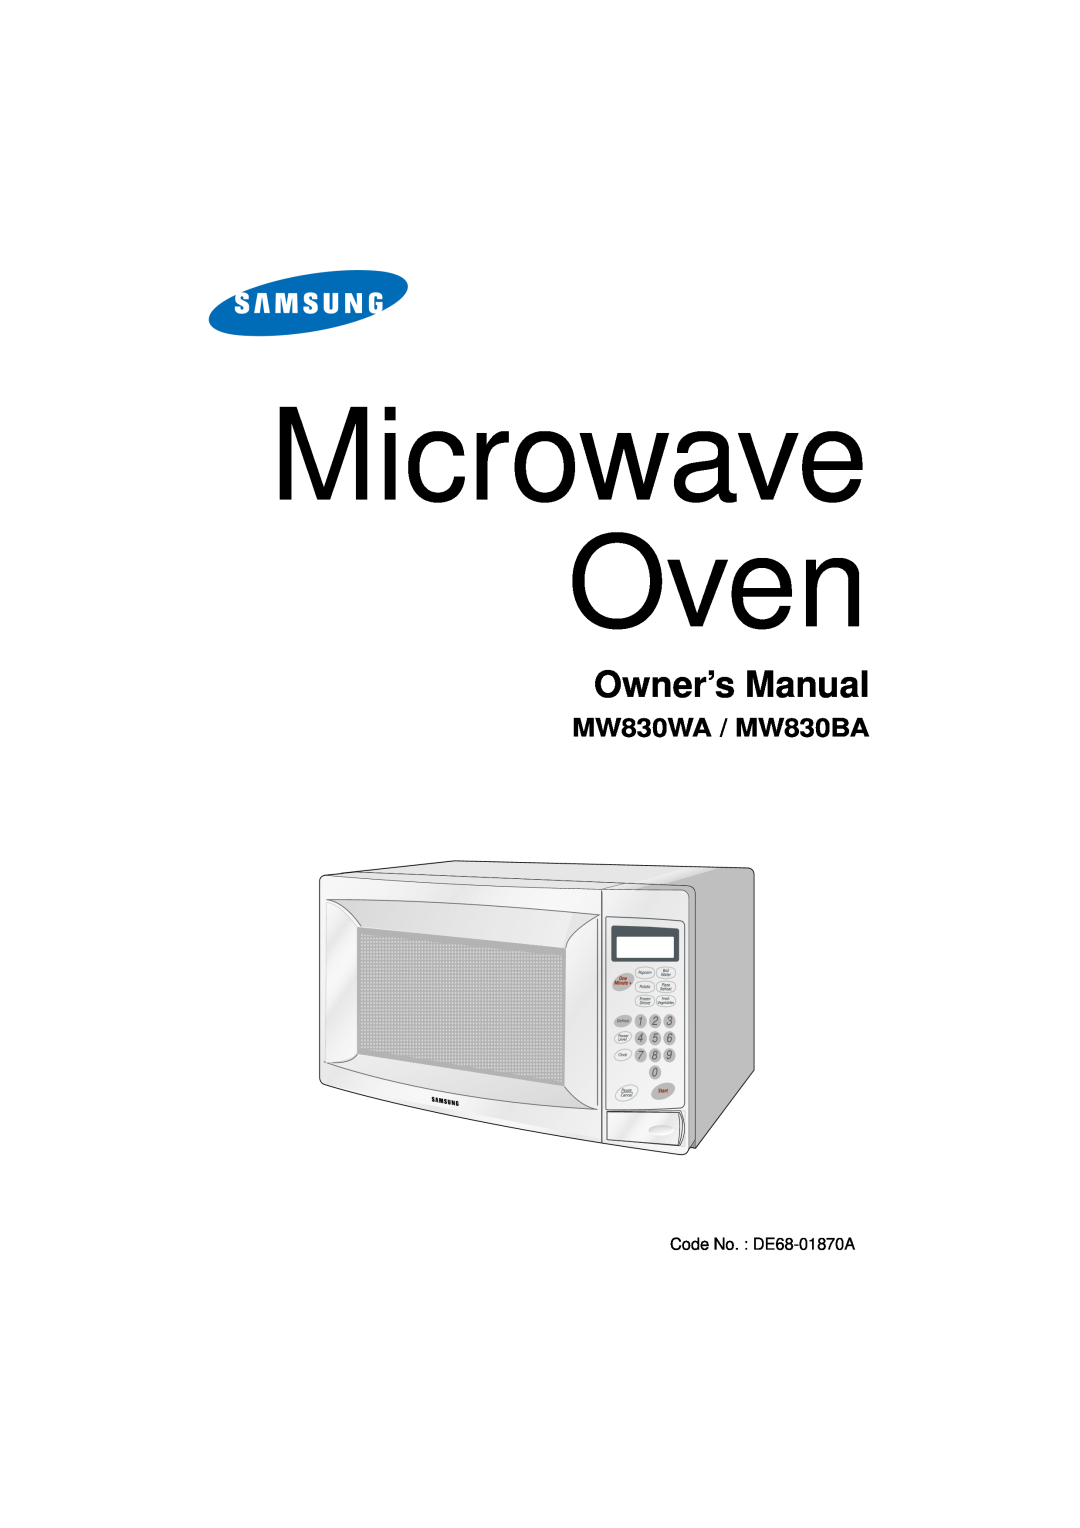 Samsung manual Owner’s Manual, MW830WA / MW830BA, Microwave Oven, 1 2 4 5 7 8 9 